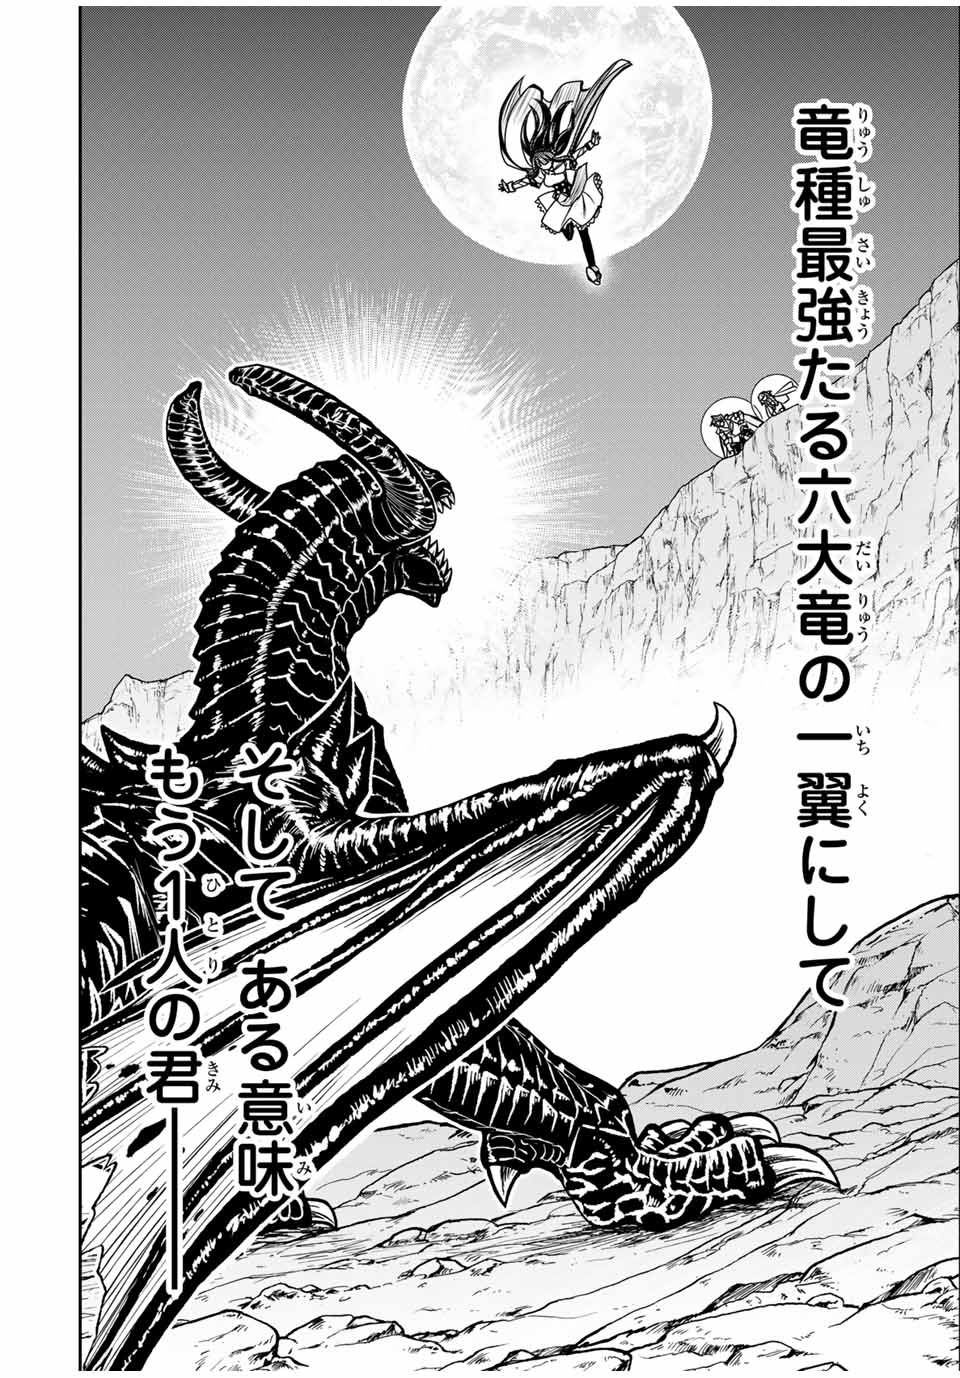 Nengan no Akuyaku Reijou (Last Boss) no Karada wo Teniiretazo!  - Chapter 21 - Page 2